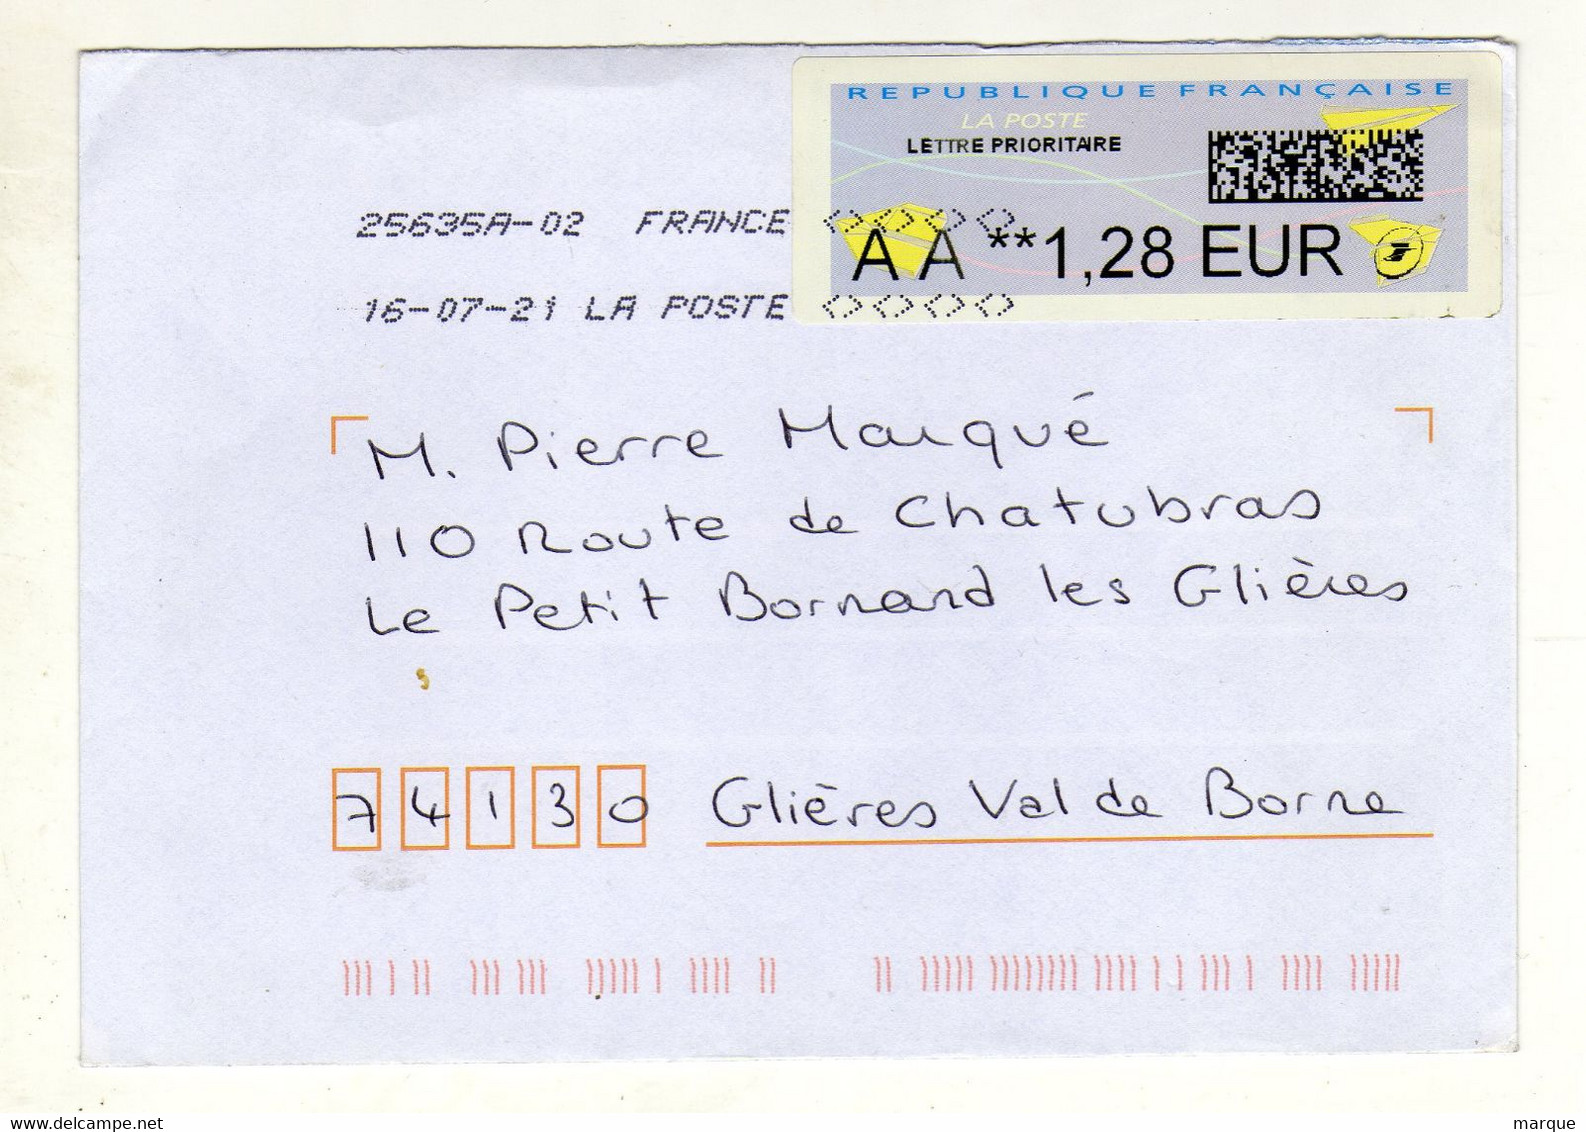 Enveloppe FRANCE Avec Vignette D' Affranchissement Lettre Prioritaire Oblitération LA POSTE 25635A-02 16/07/2021 - 2010-... Illustrated Franking Labels